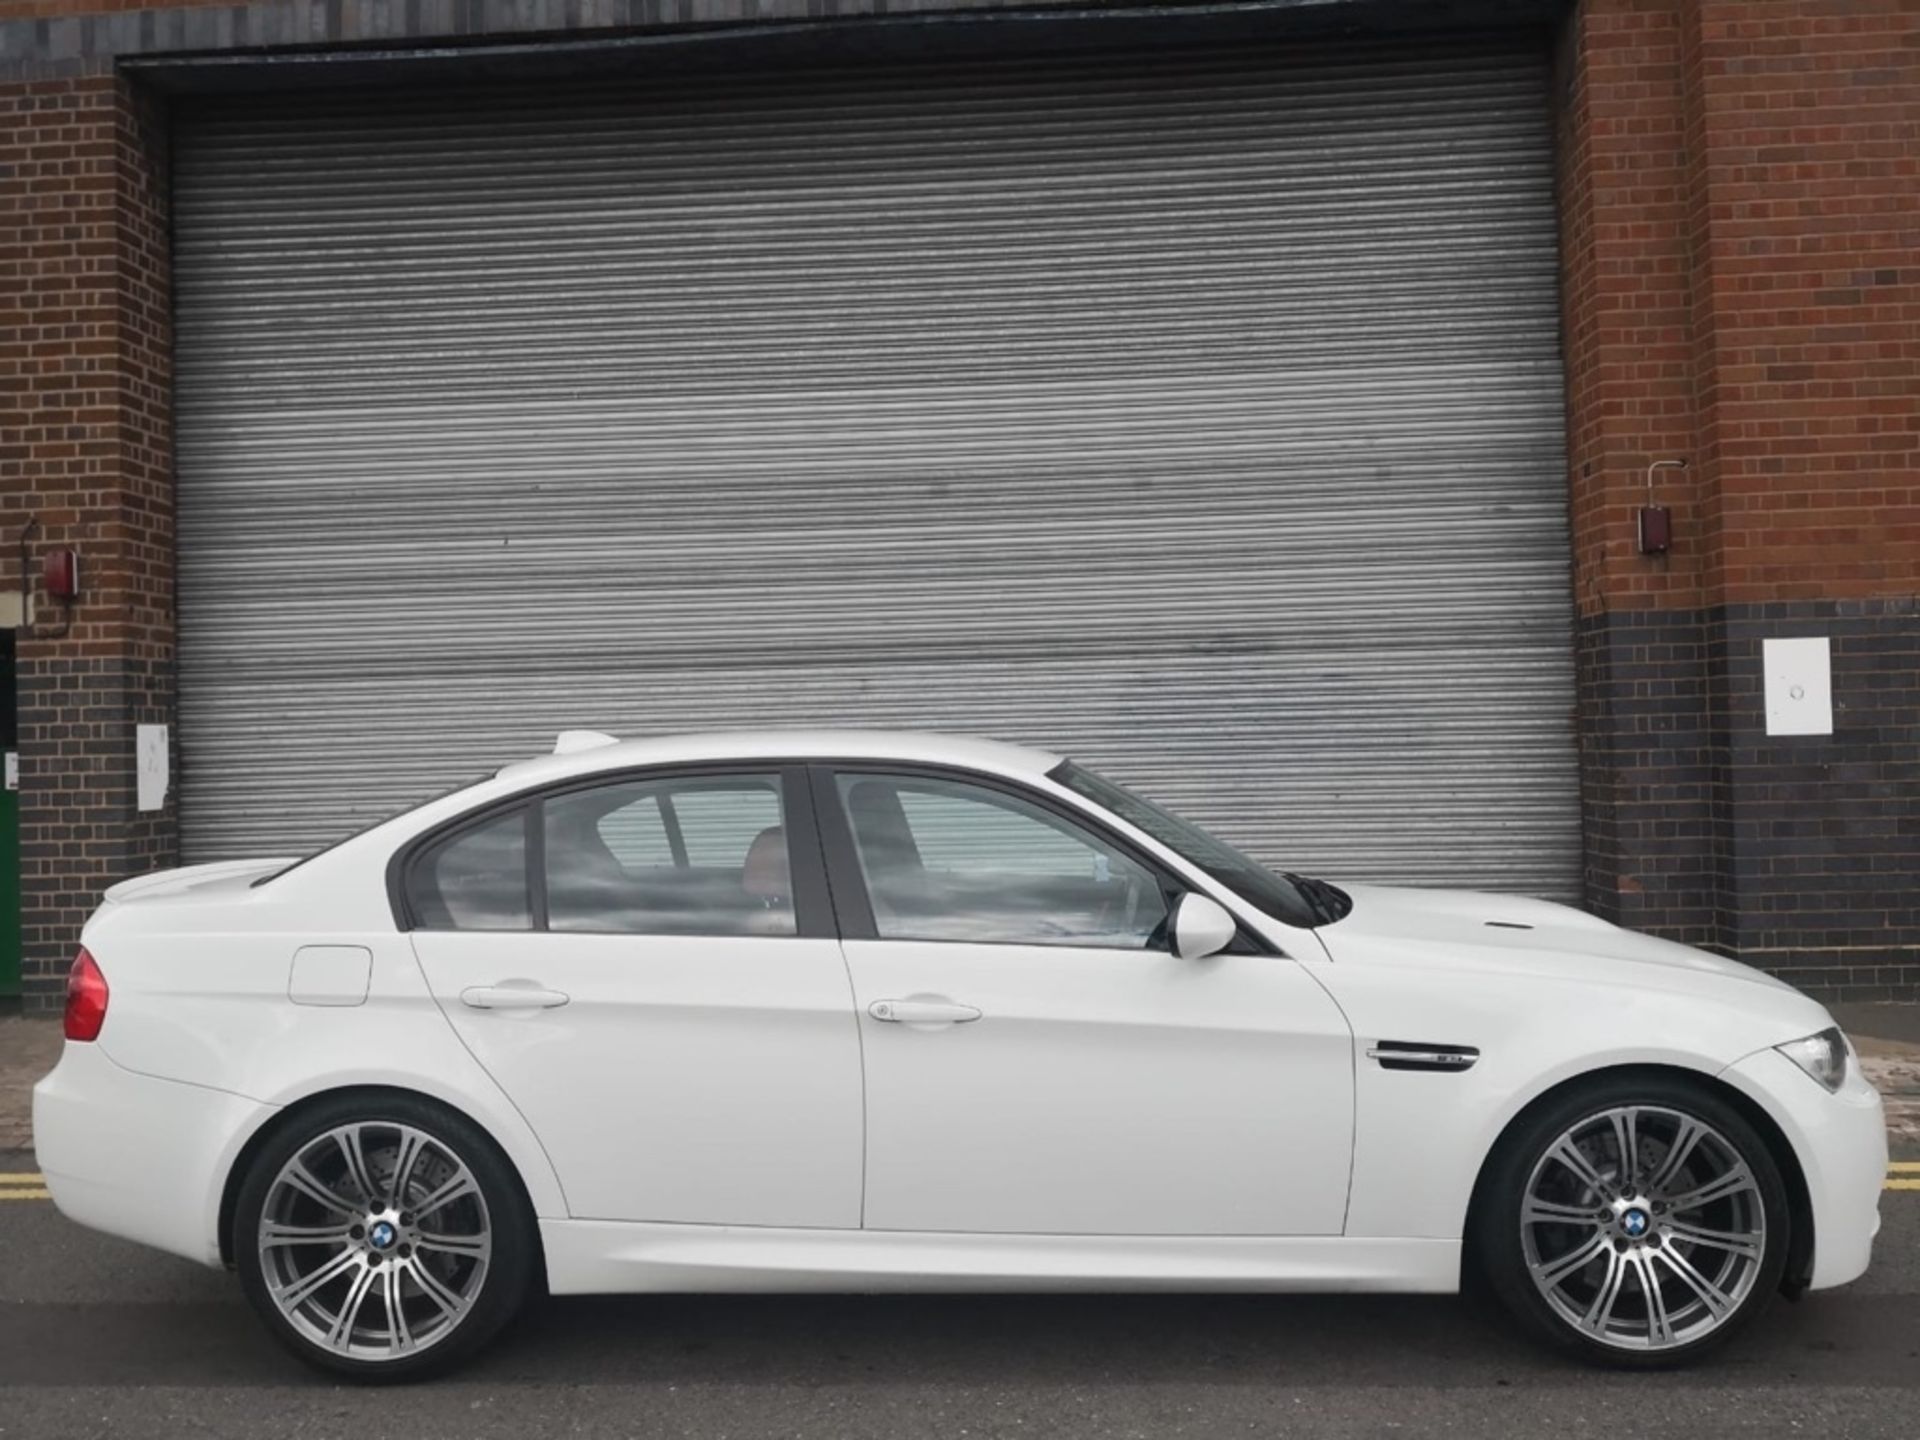 BMW 4.0 V8 M3 DCT – Automatic - Petrol – 2010 – White - 2 Keys- FDSH- Sat Nav Reg: A010 VNS – 2010 - Image 3 of 9